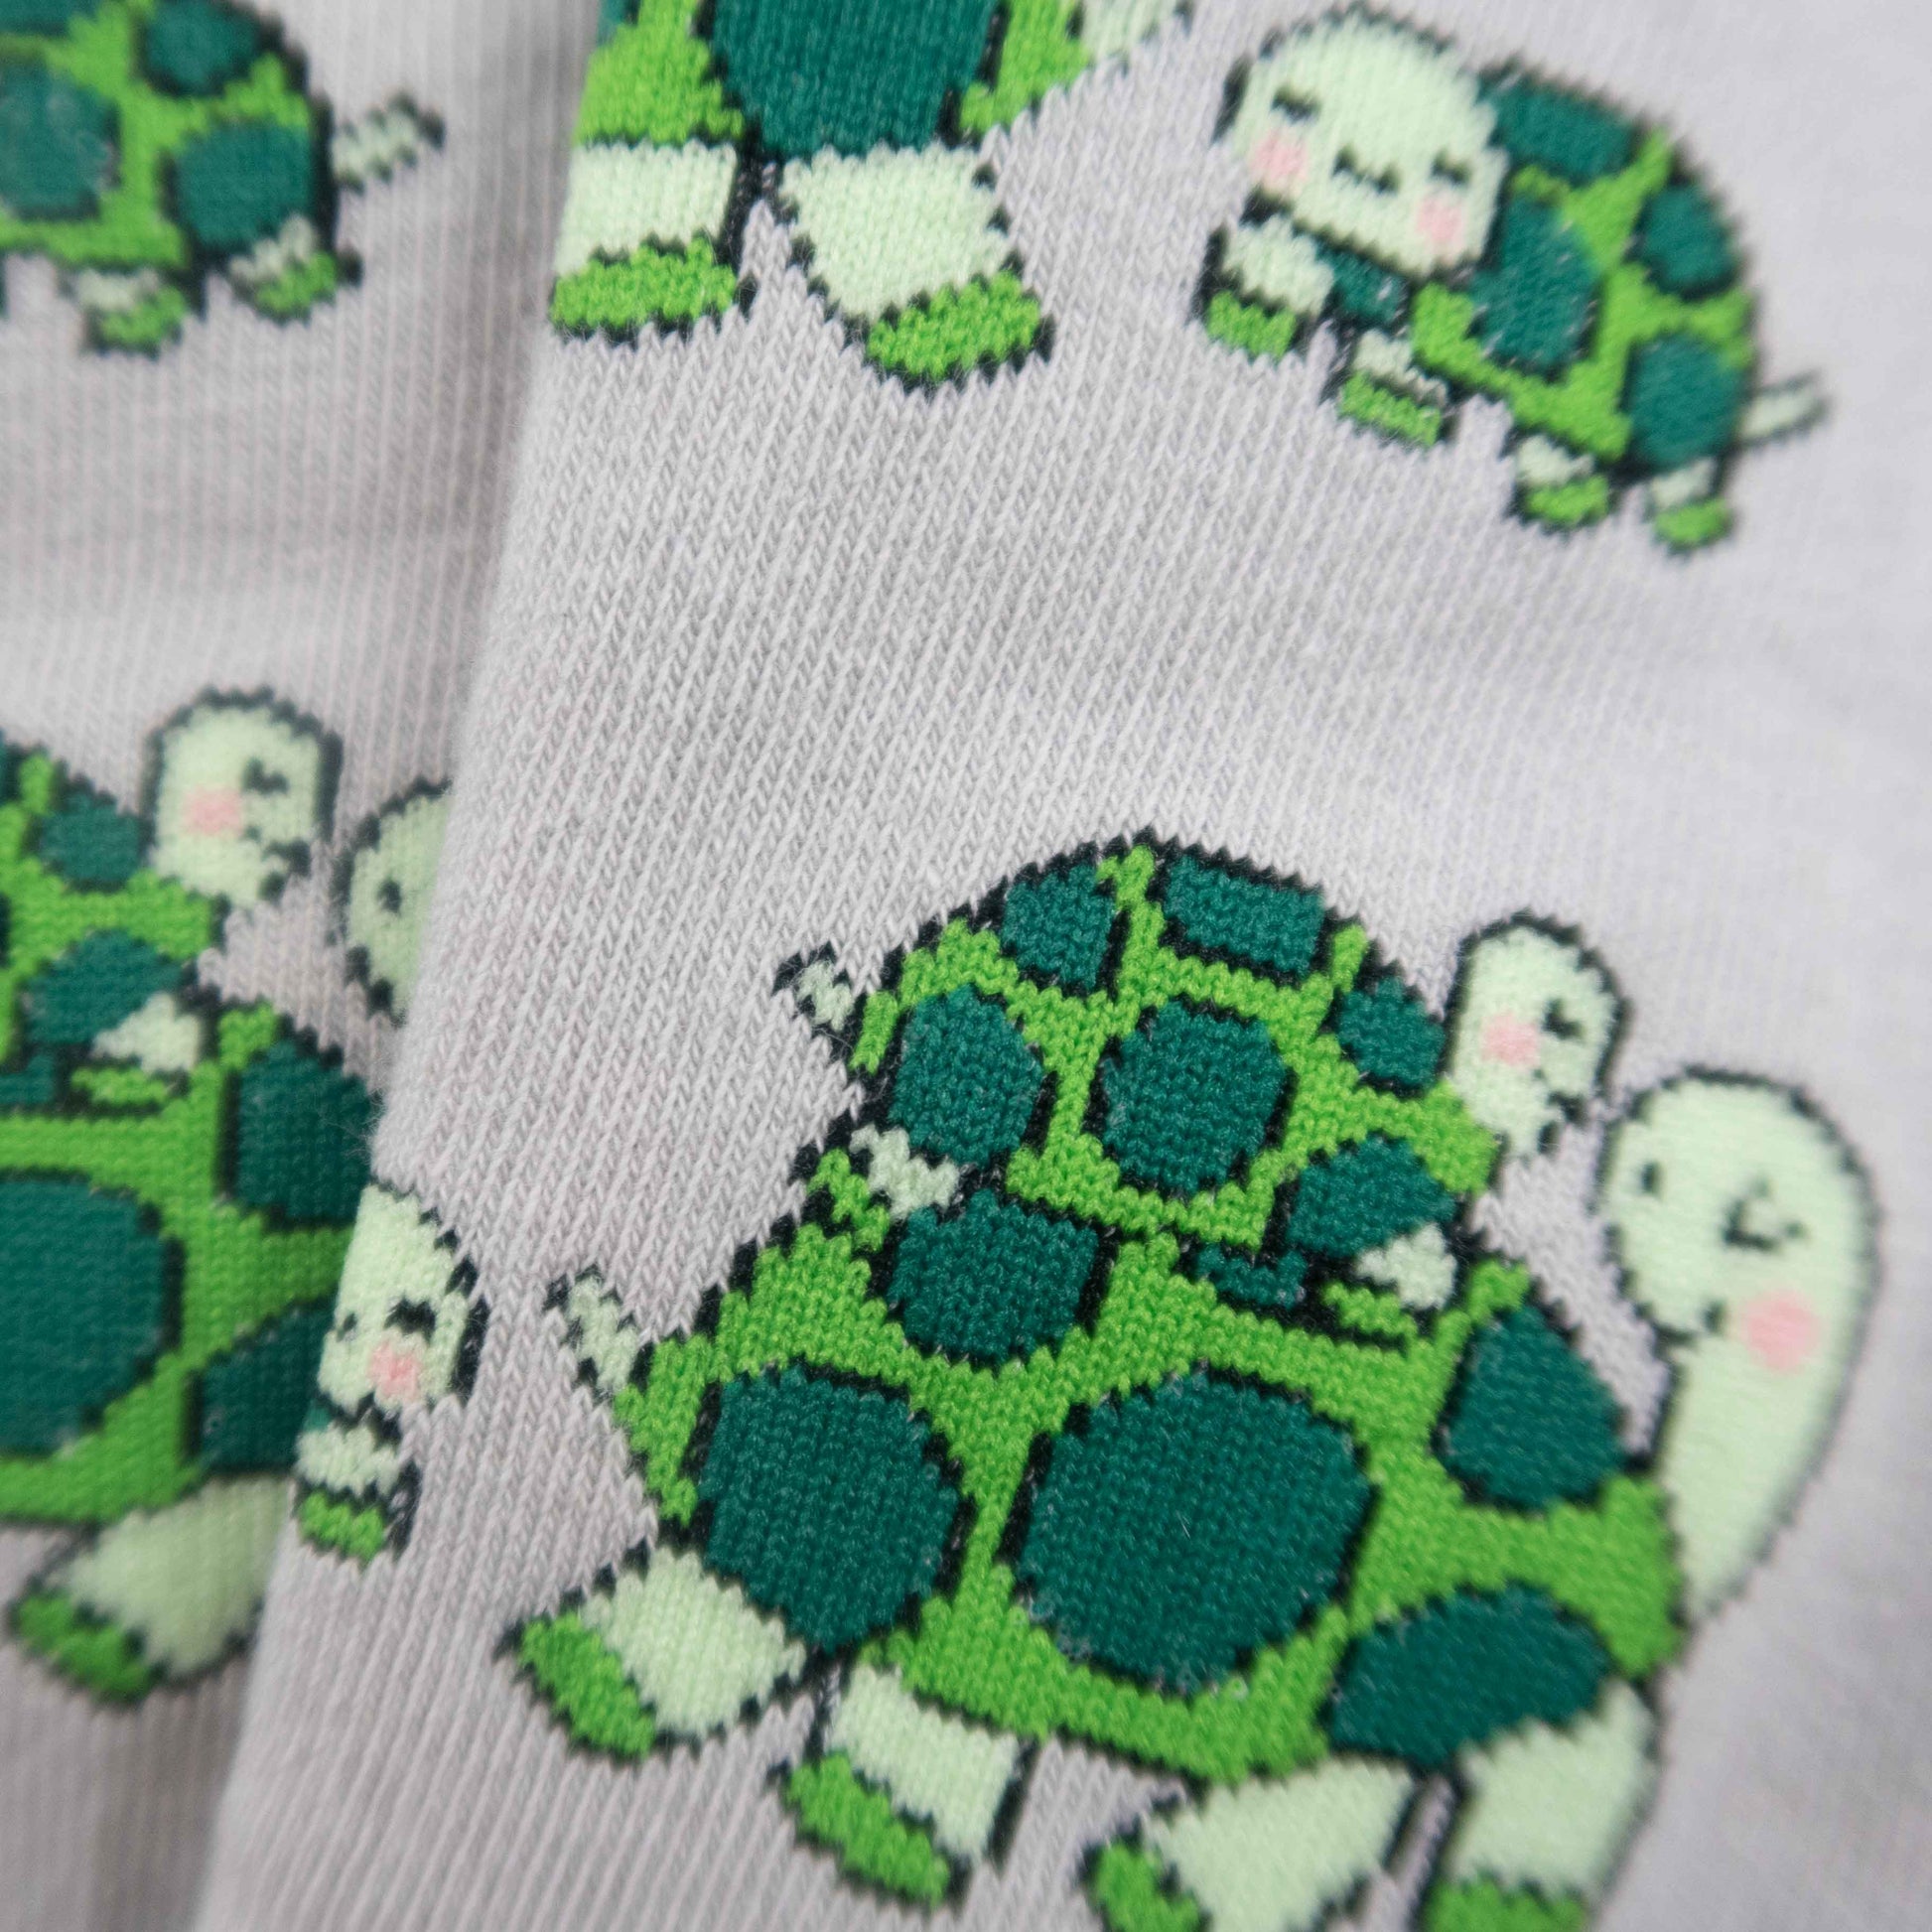 Turtles - Imagery Socks